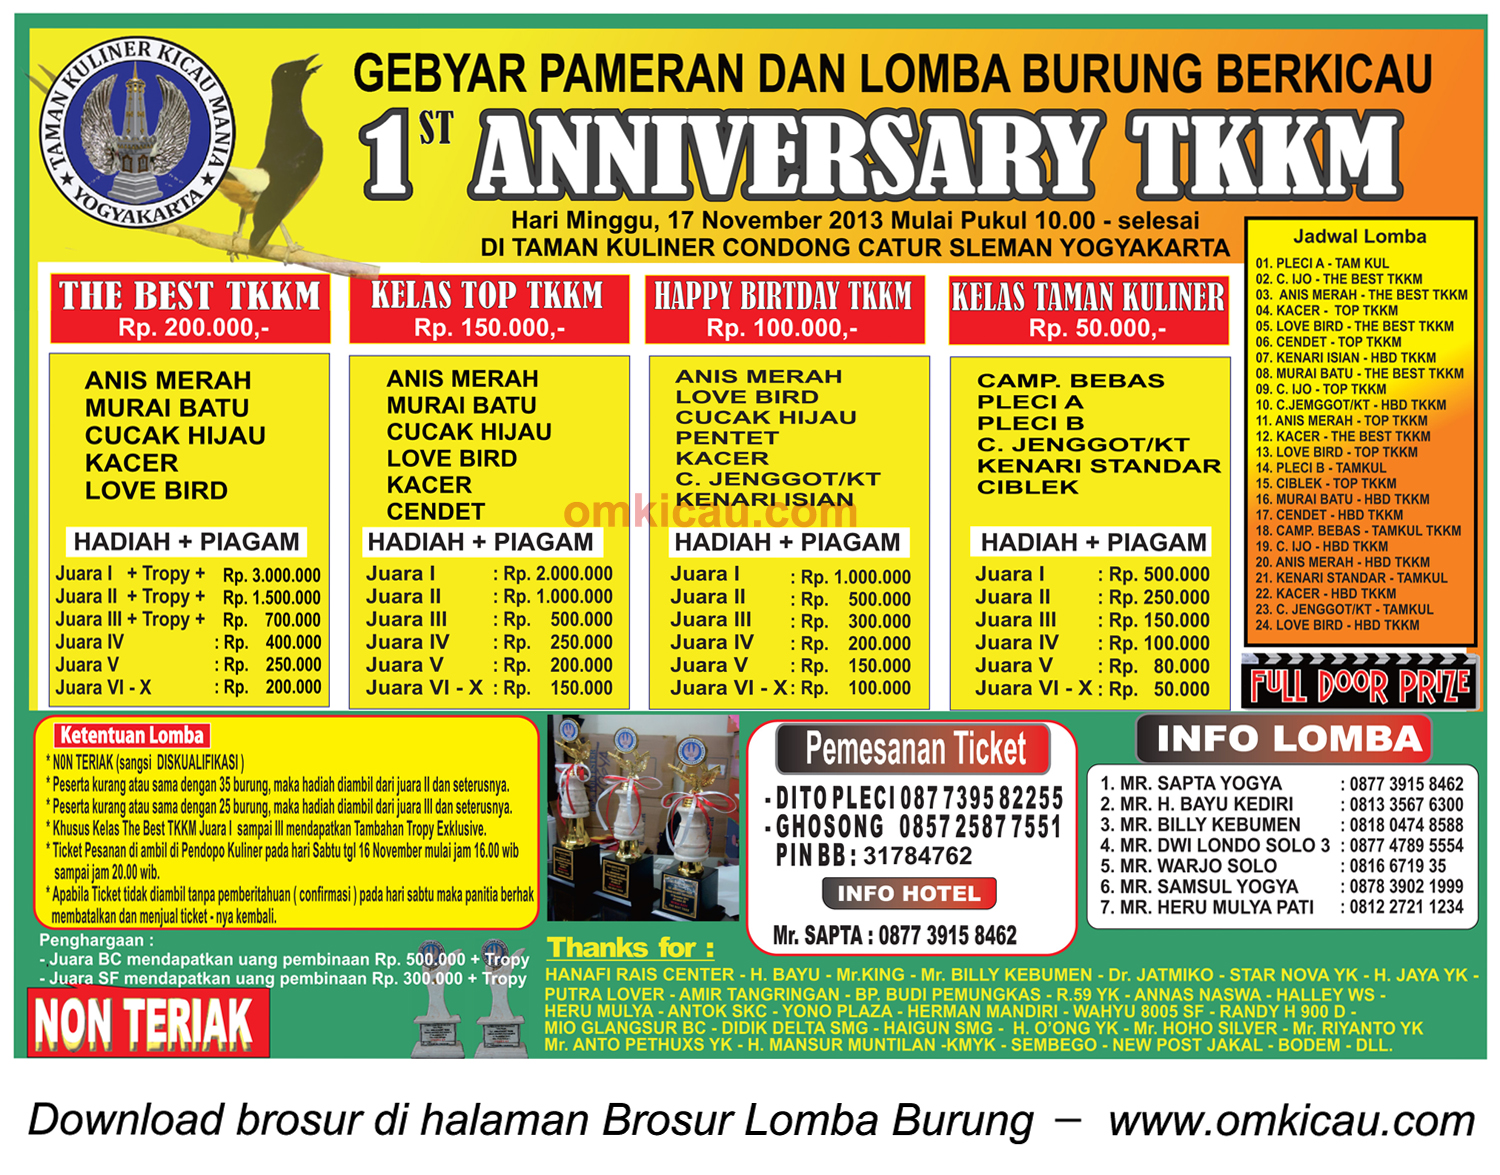 Brosur Lomba Burung Berkicau 1st Anniversary TKKM, Jogja, 17 November 2013